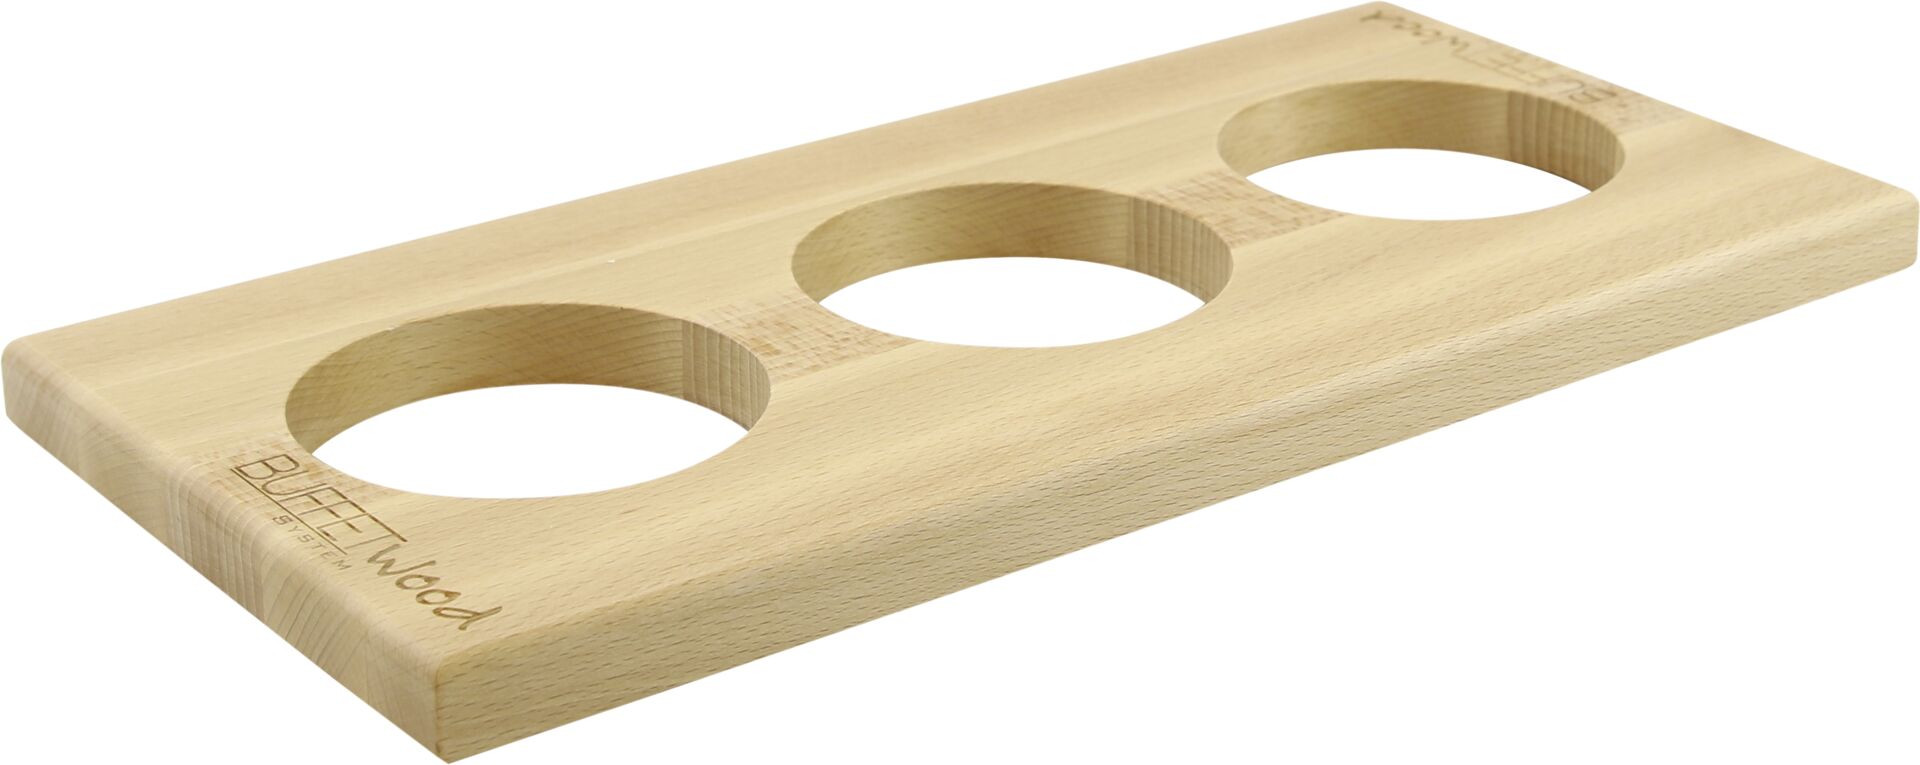 Buffetsystem "Wood" GN 1/3  Aufsatz 2cm mit 3 Aussparungen Ø 10cm